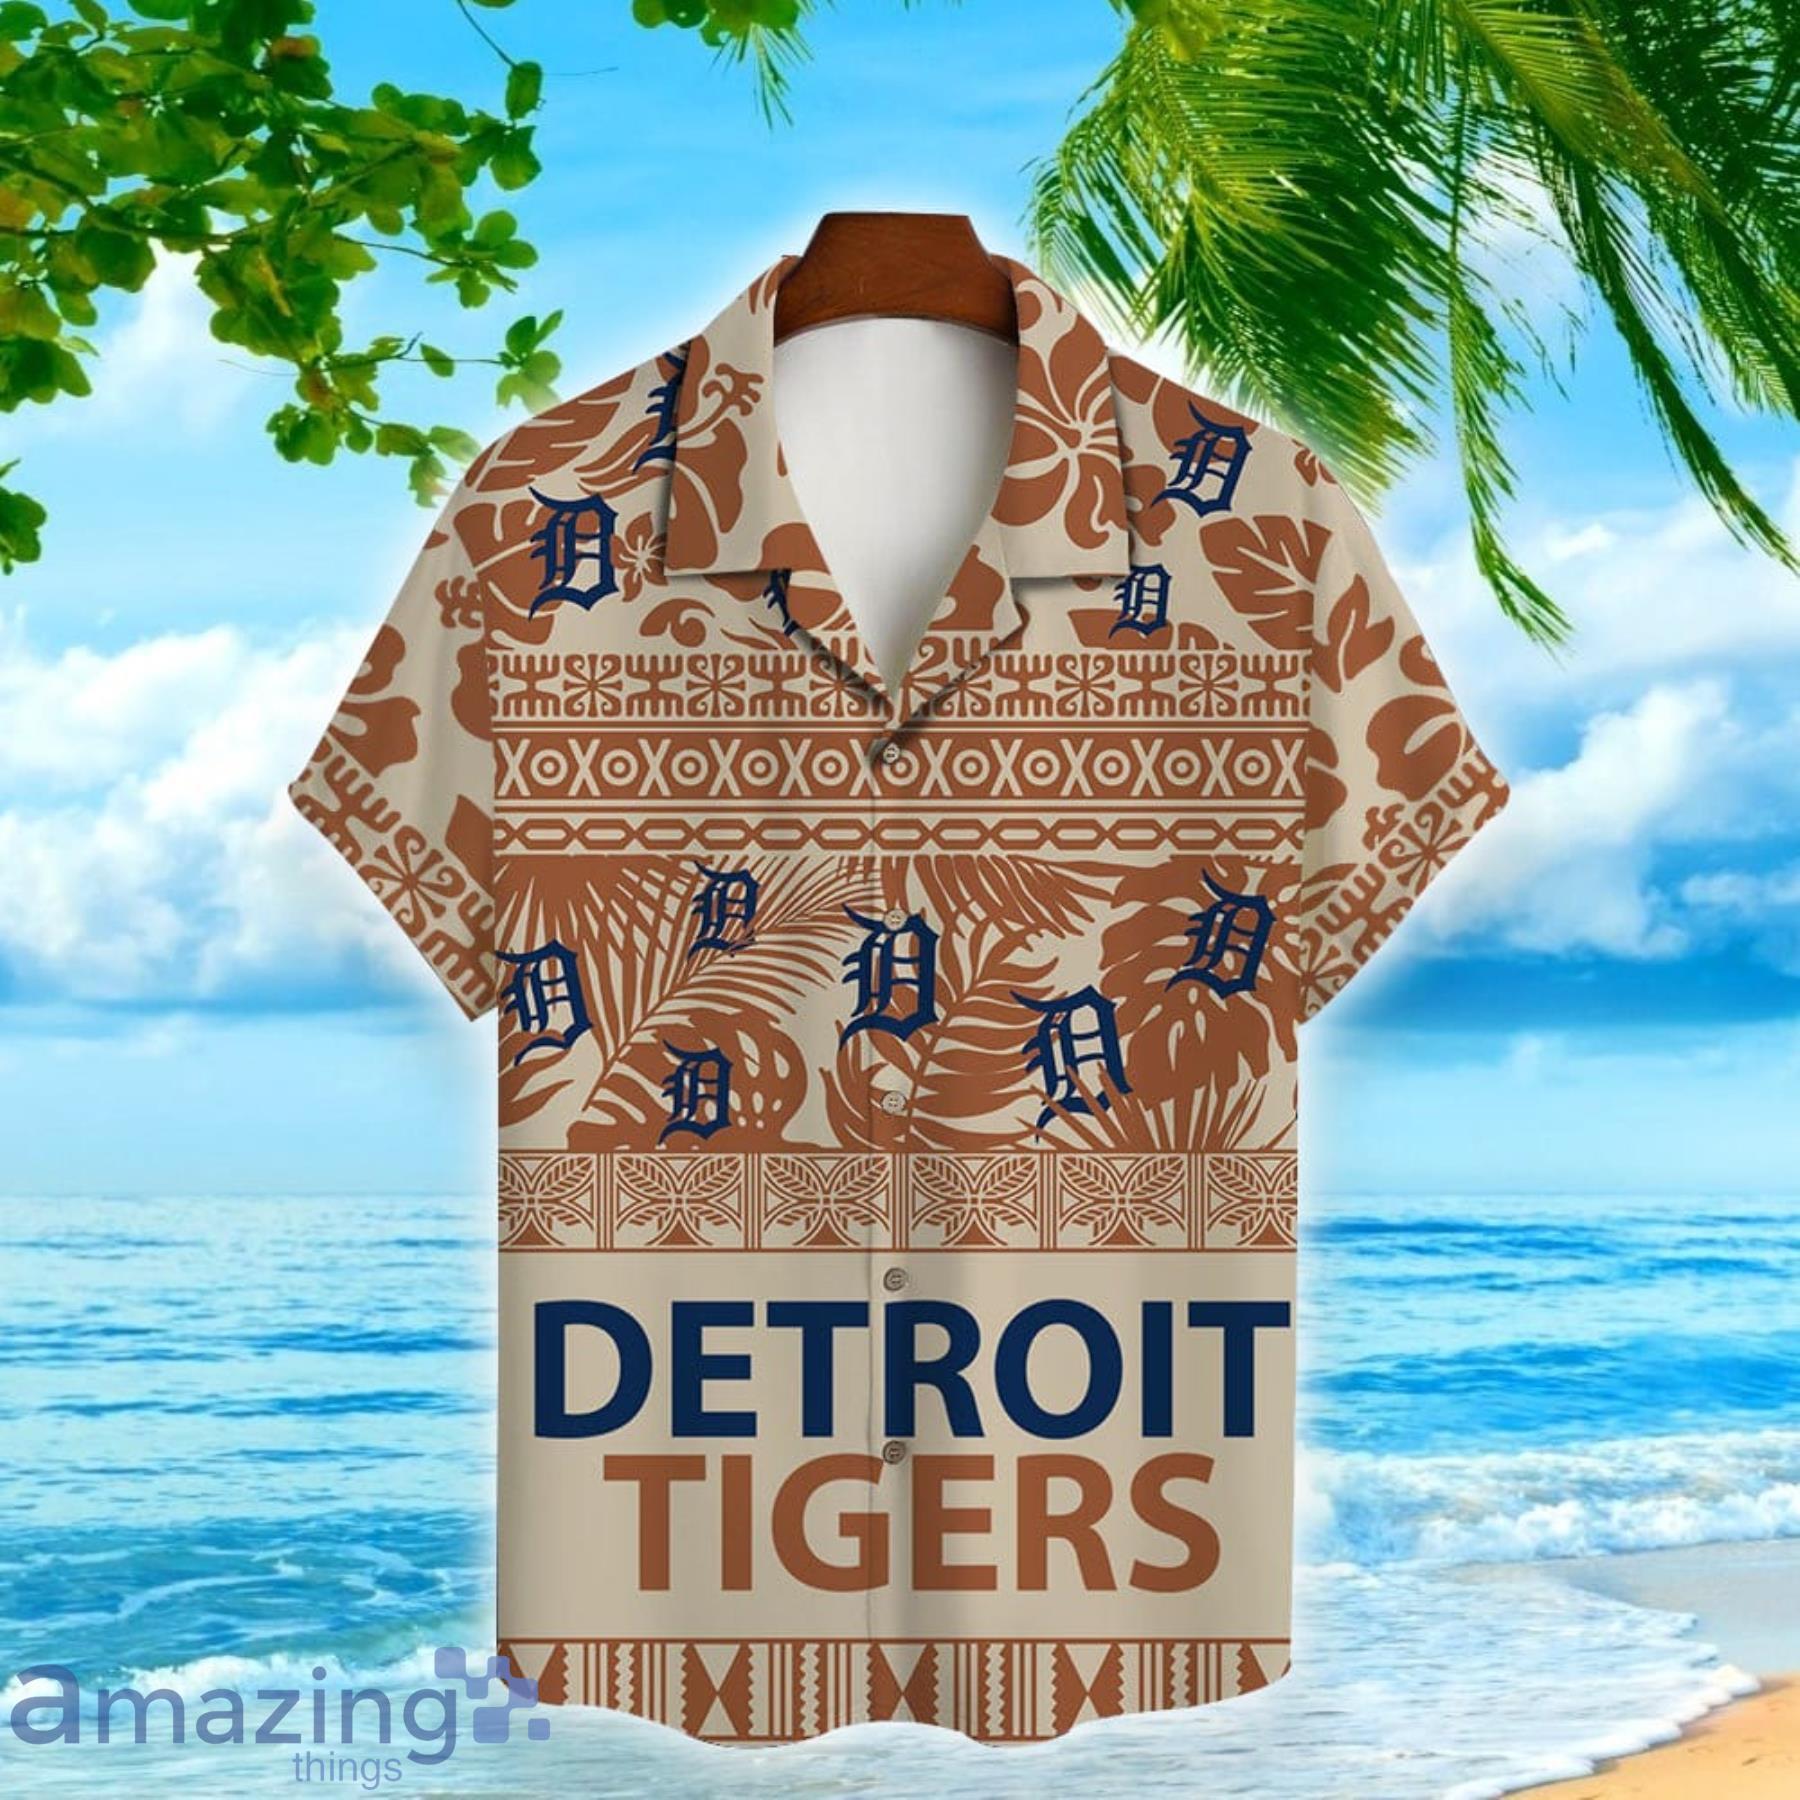 Detroit Tigers Men's Classic Road Jersey T-Shirt by Vintage Detroit Collection